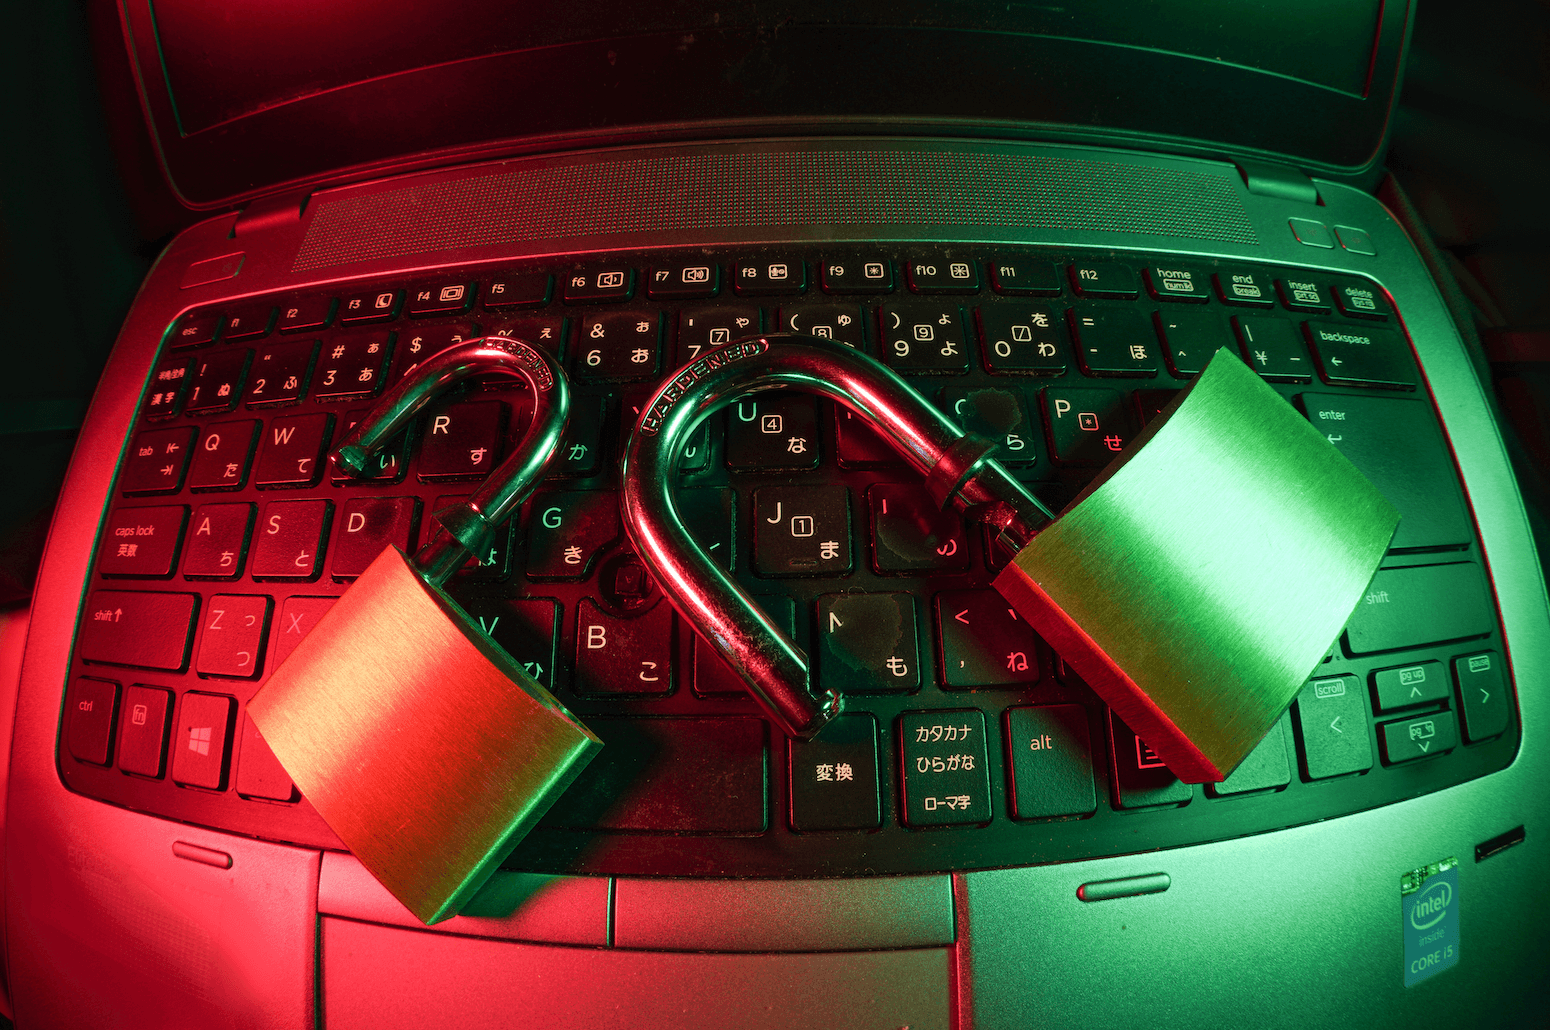 locks on keyboard symbolizing data breach